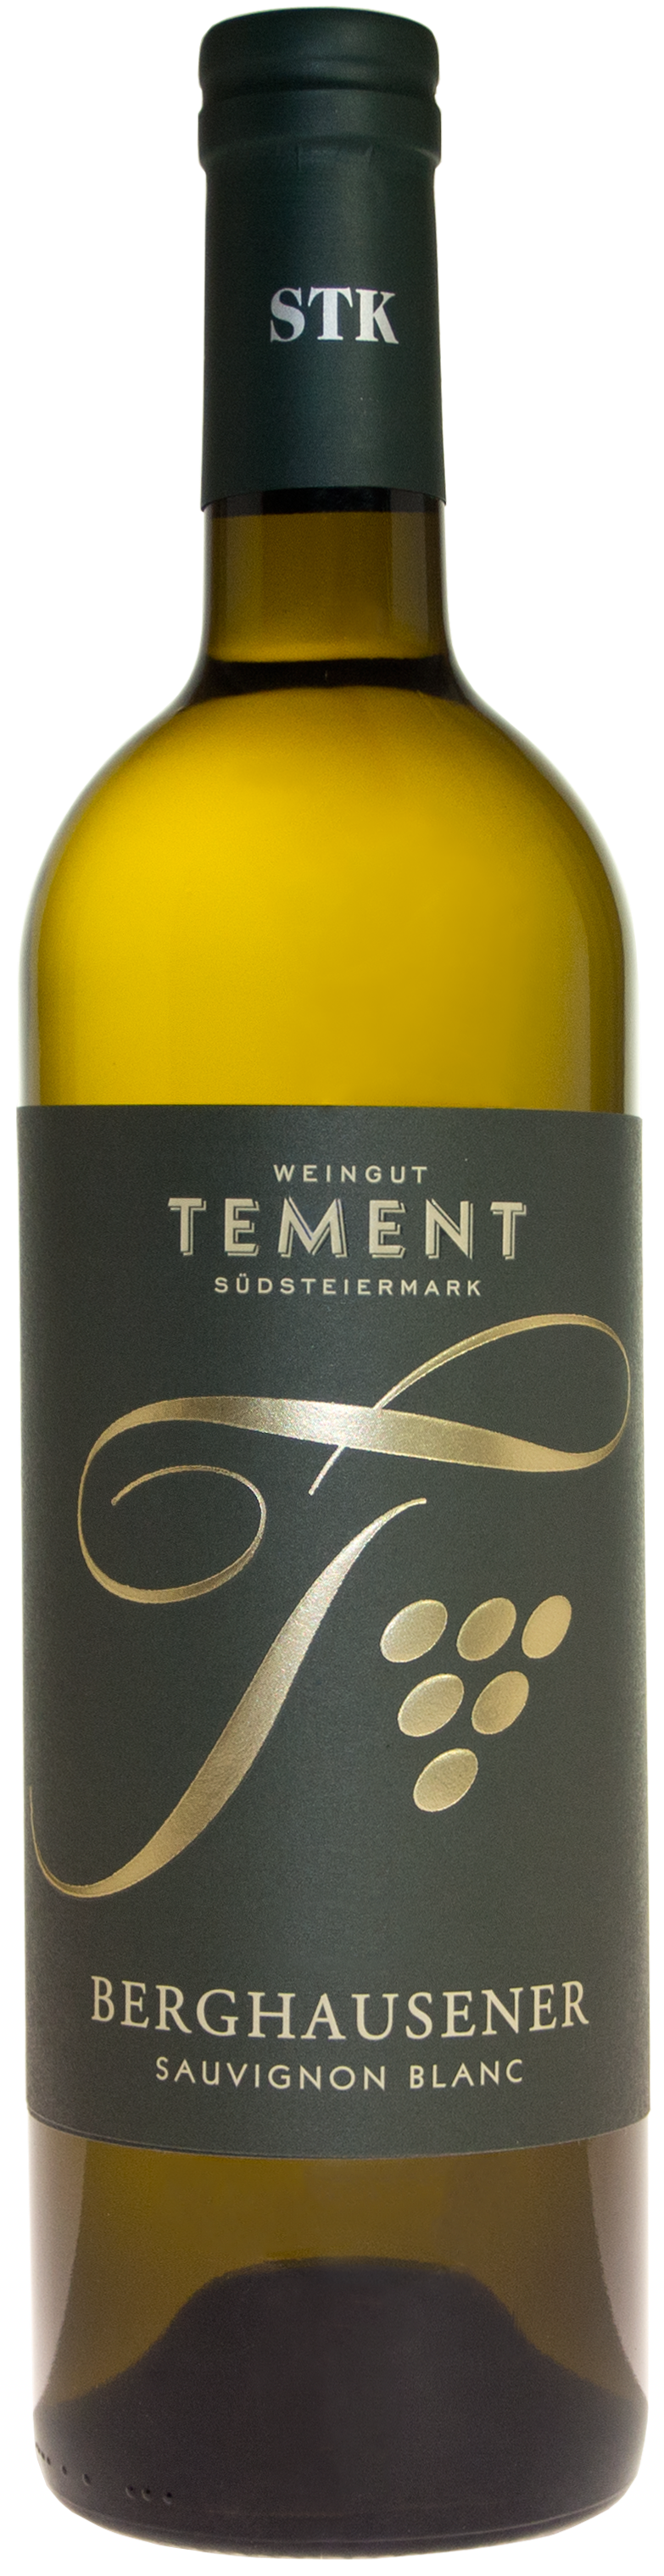 Tement, Berghausener Sauvignon Blanc, 2014